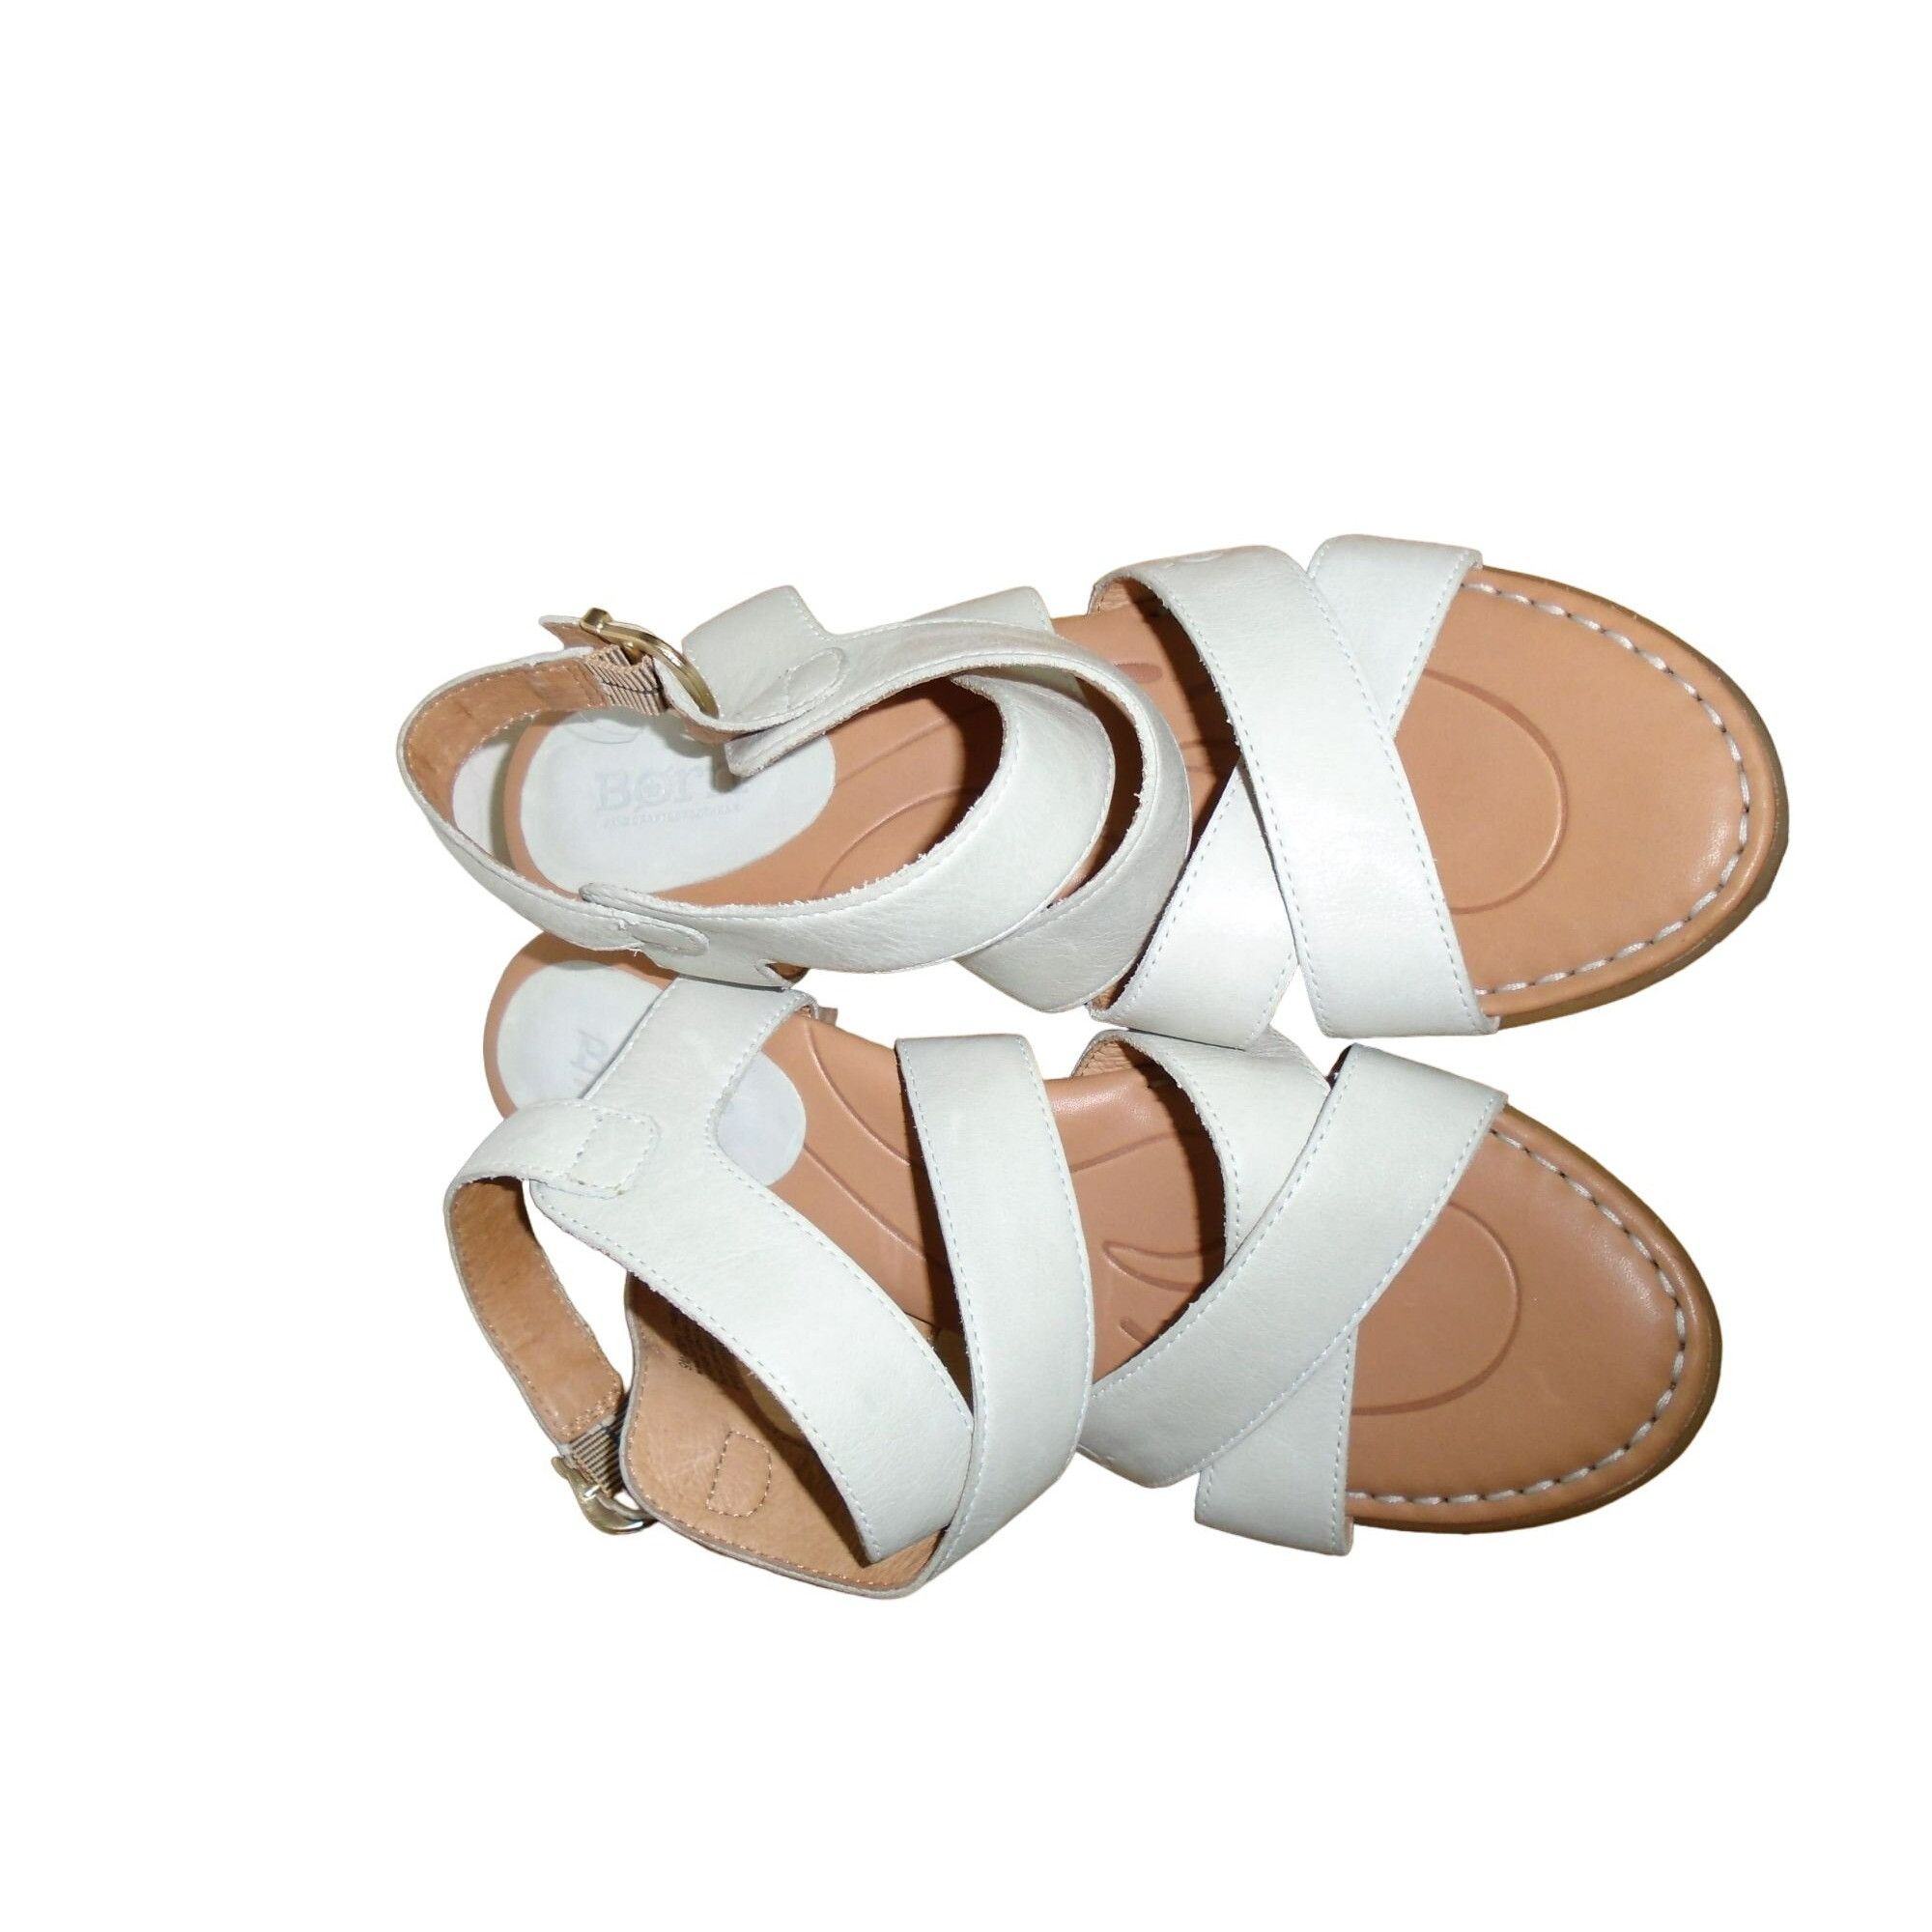 Born Born Leather Women's White Leather Sandals - 9 - New Size US 9 / IT 39 - 8 Thumbnail